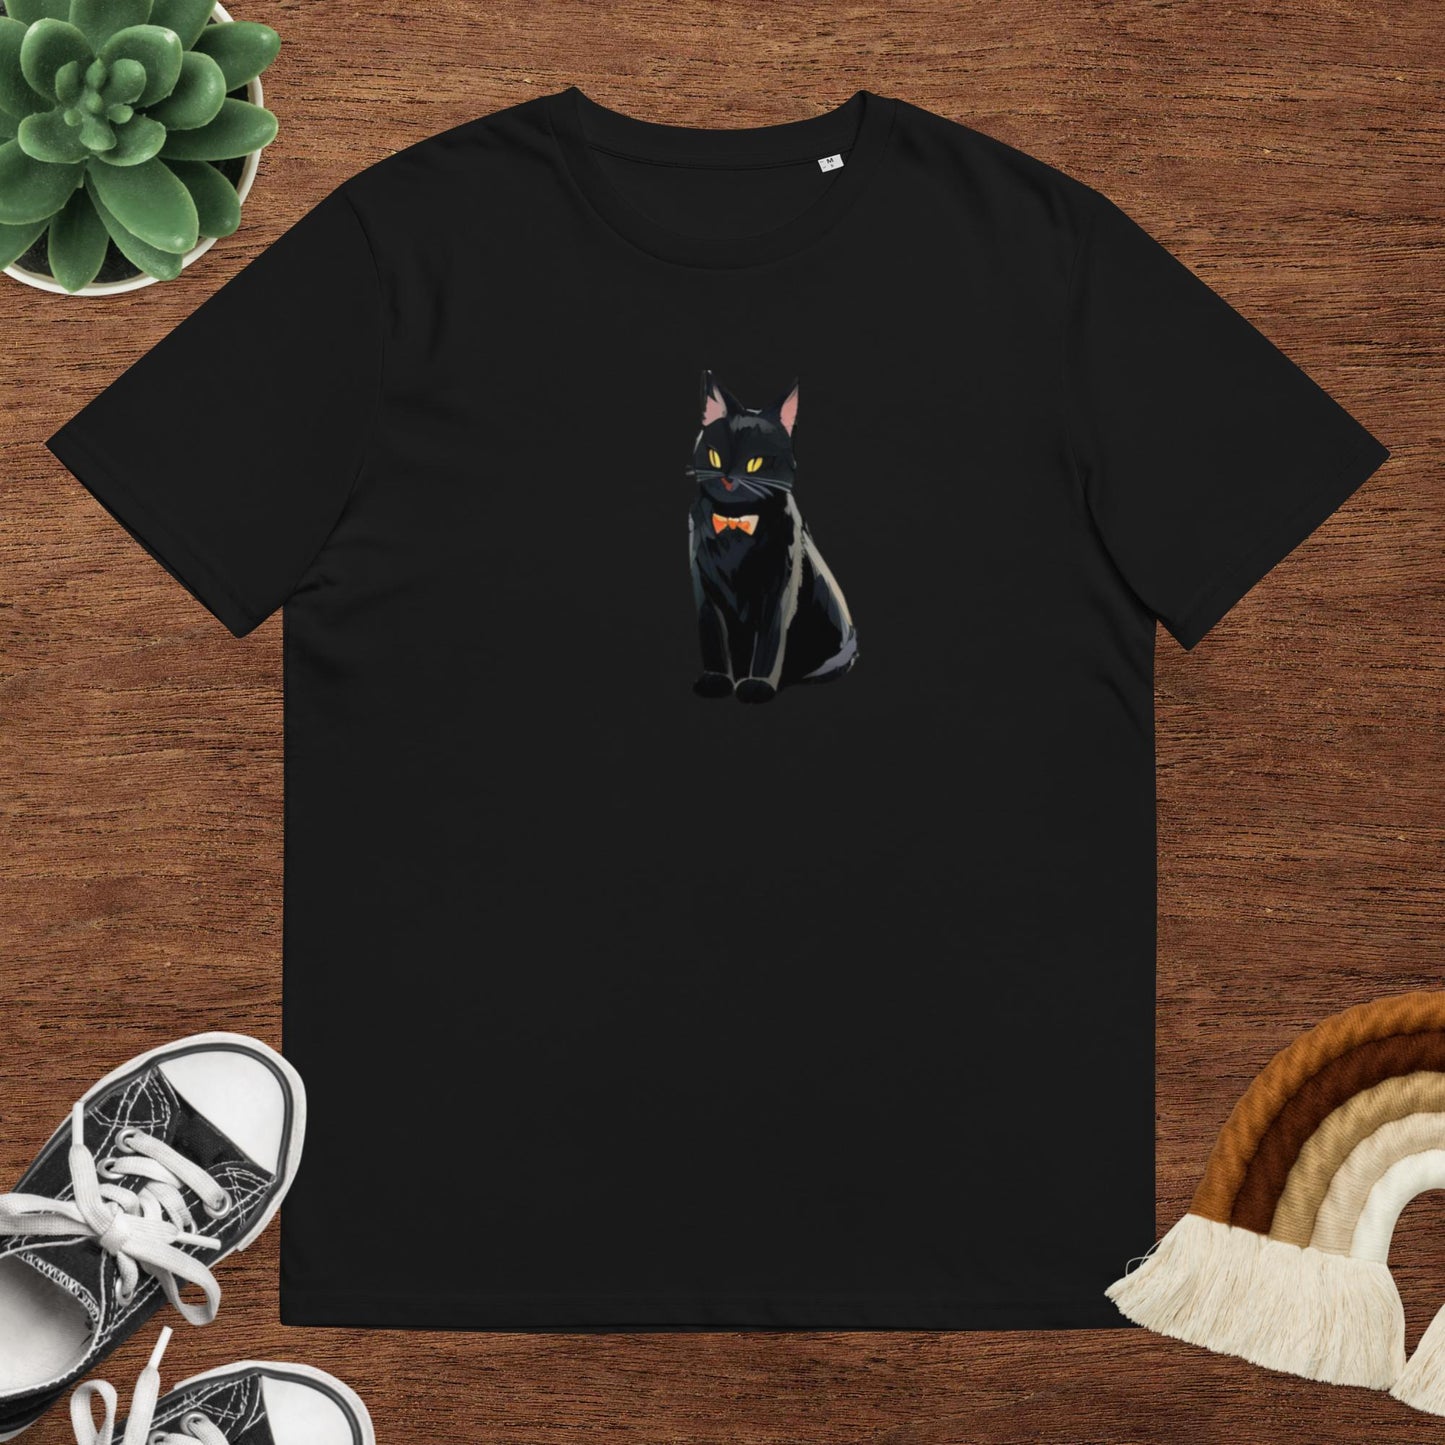 Unisex organic cotton t-shirt black cat with orange bowtie